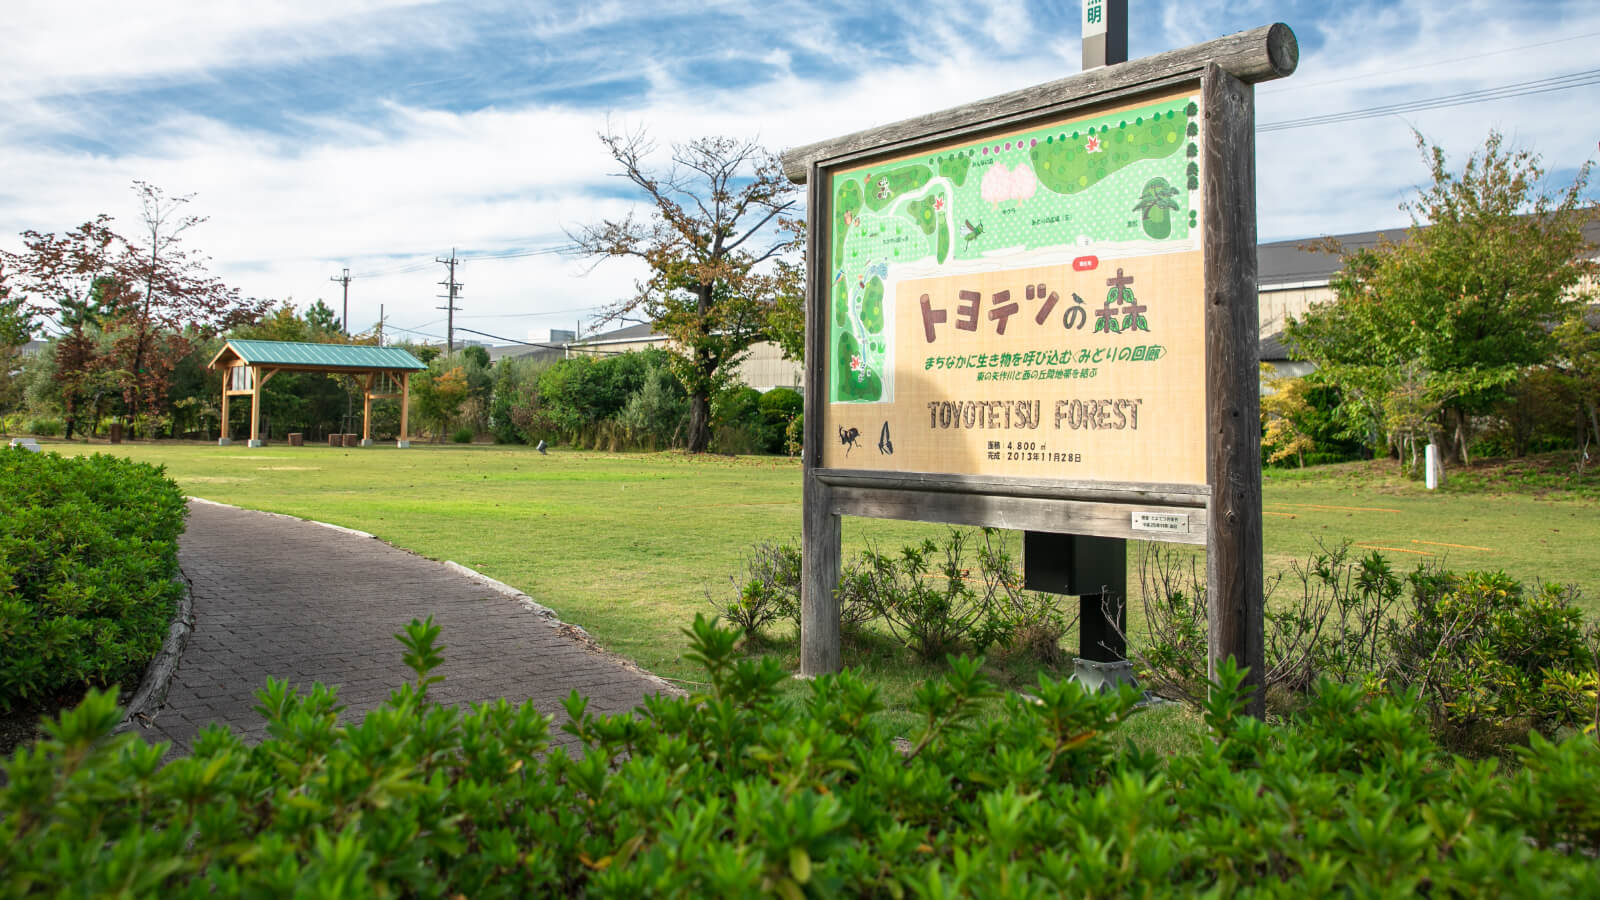 Toyotetsu Forest